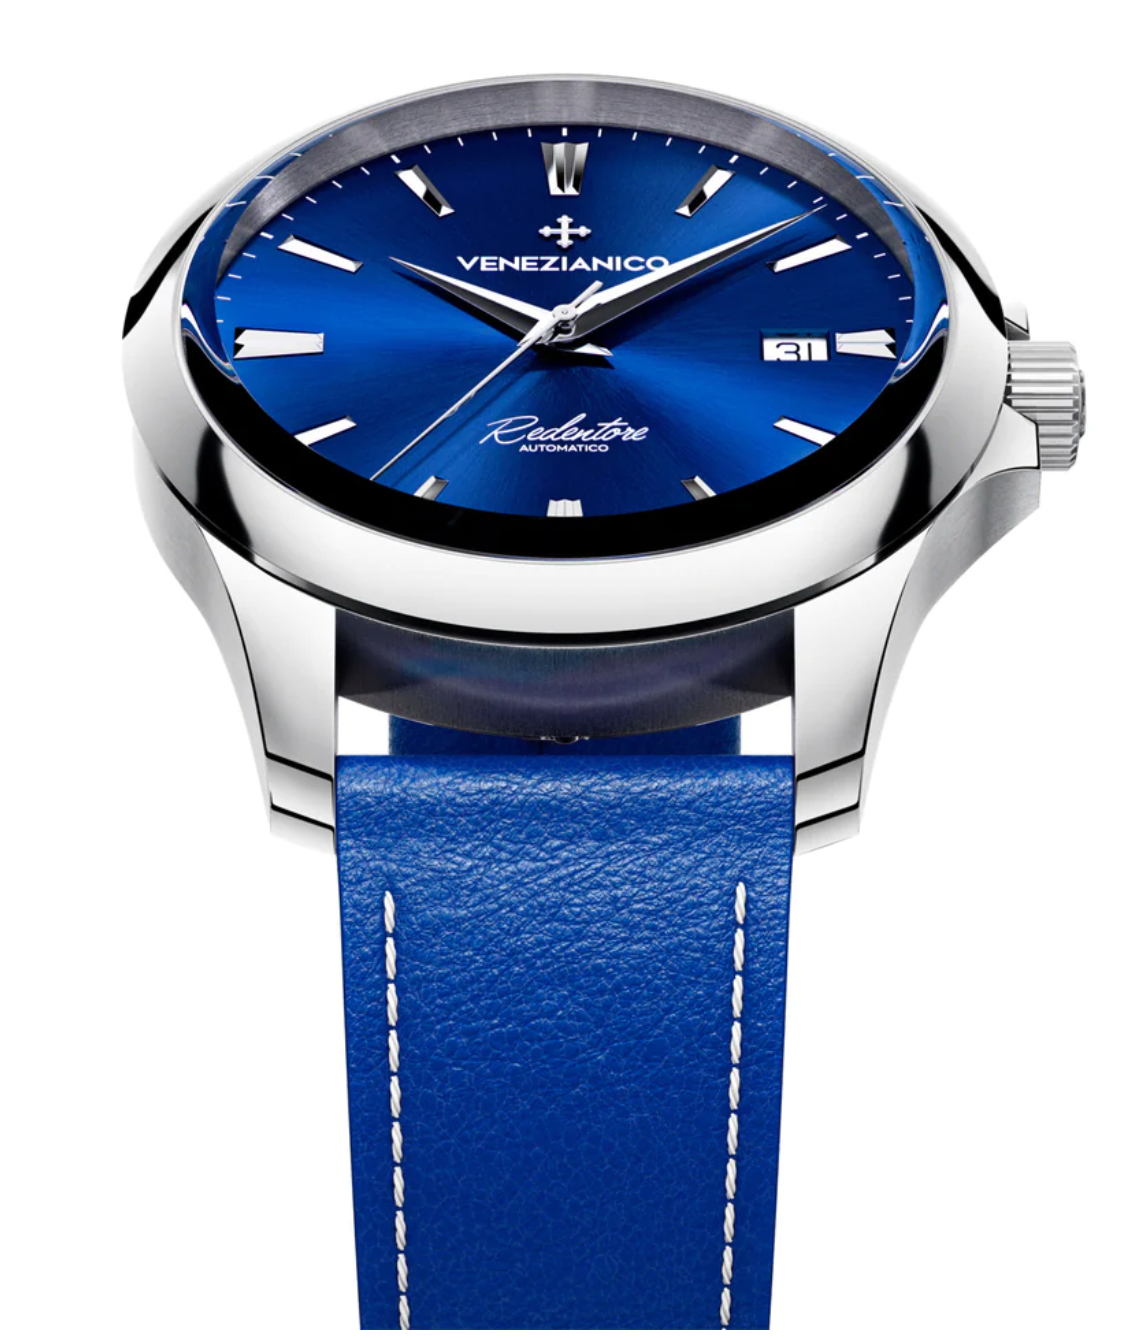 Venezianico Automatic Watch Blue Leather Redentore 40 1221502